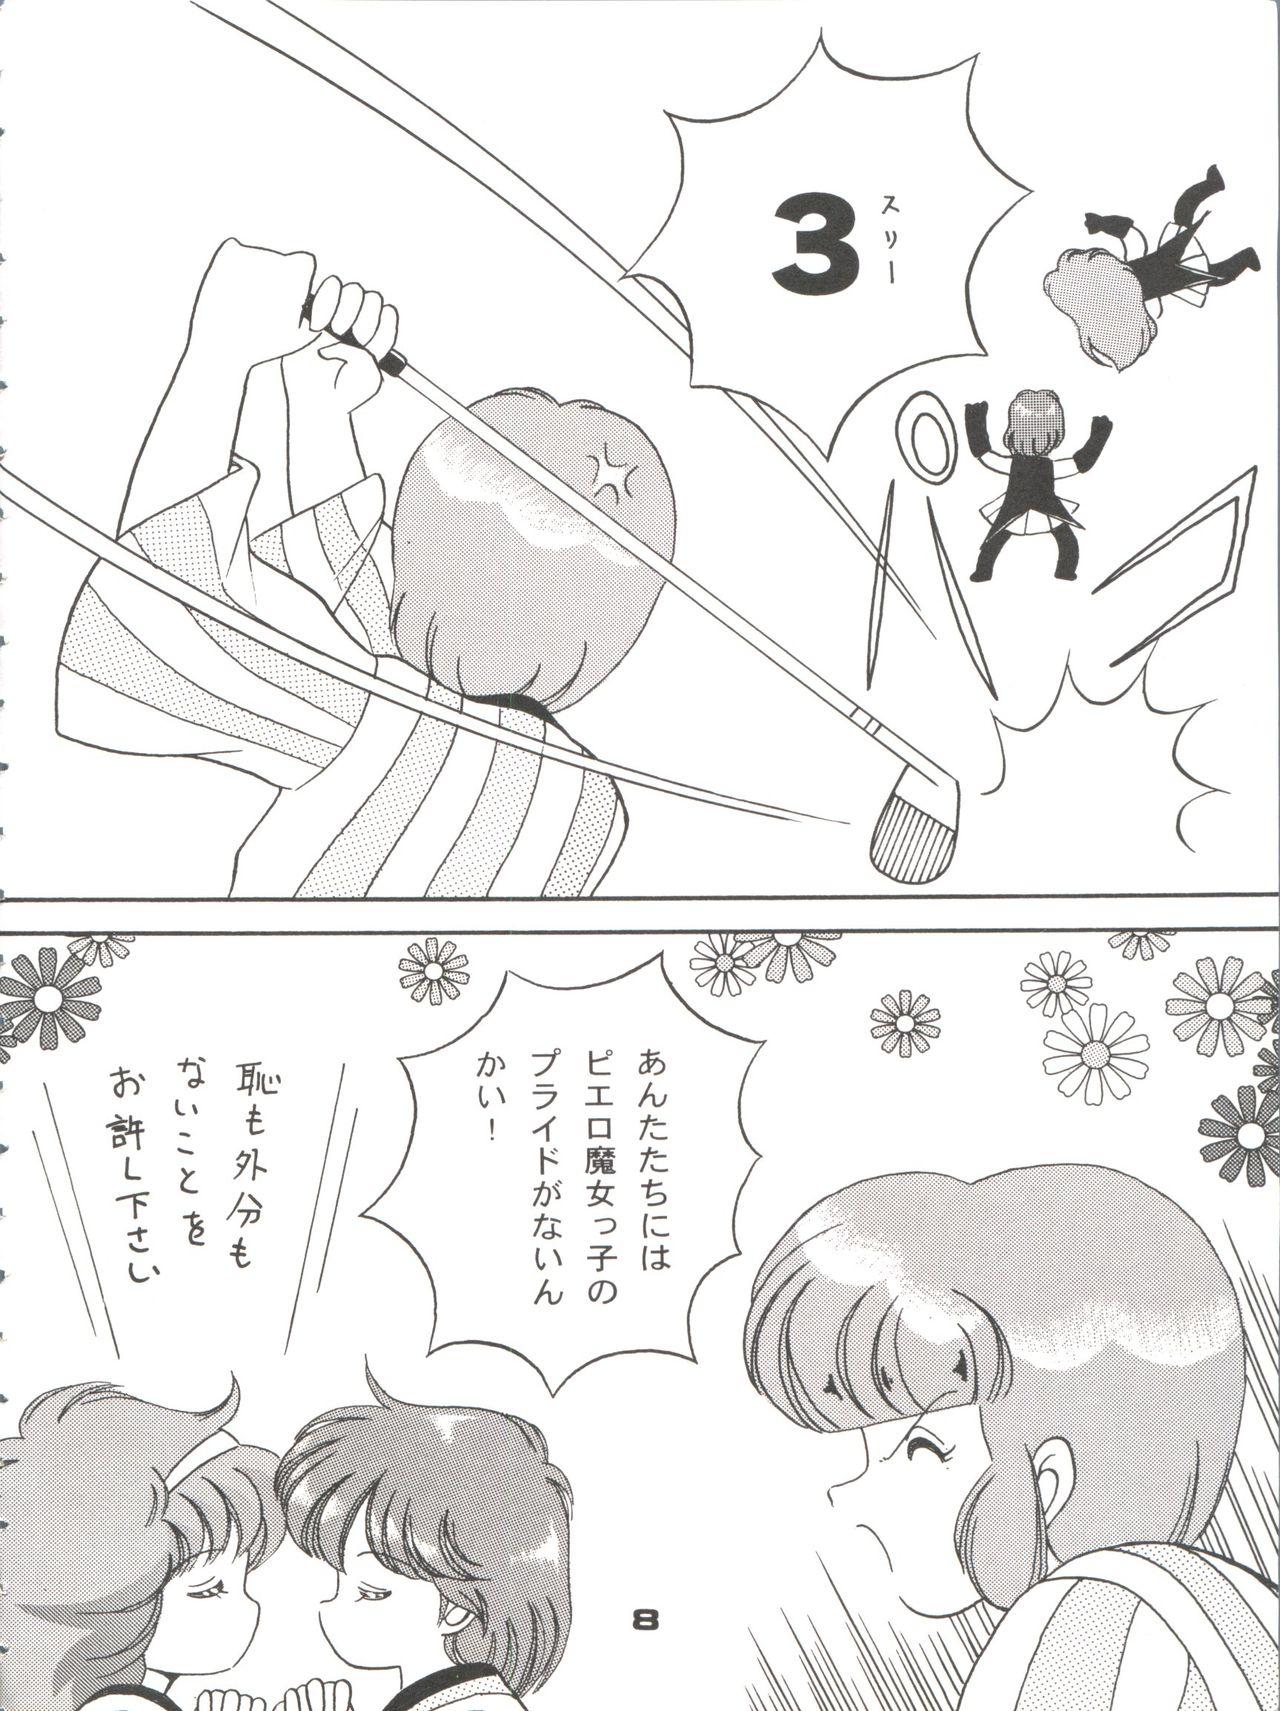 Corno Magical Ponponpon Returns - Magical emi Flagra - Page 7